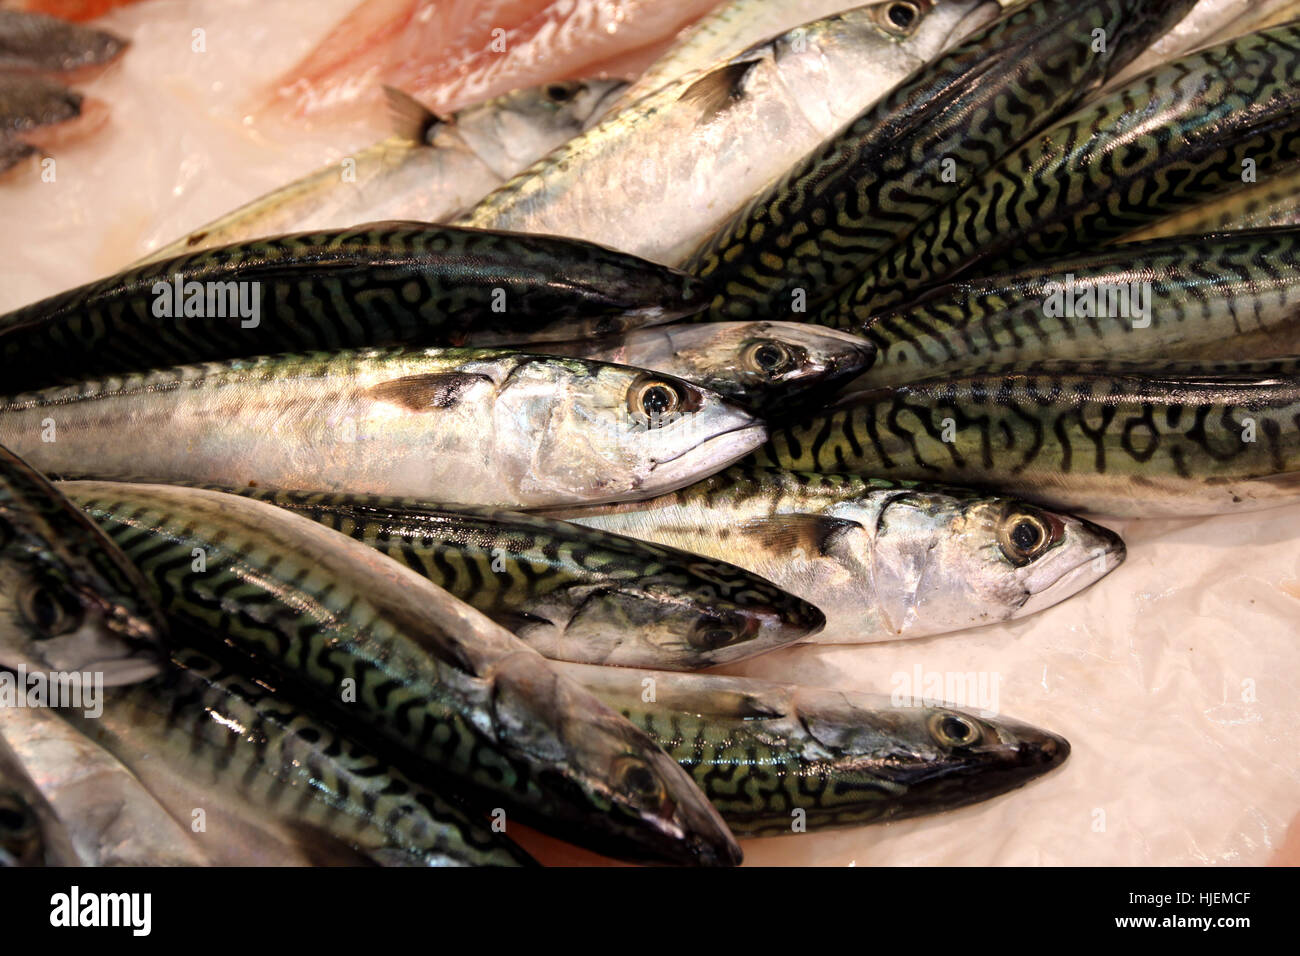 fish, fish-market, weekly market, marketplace, flea market, mackerel, Stock Photo